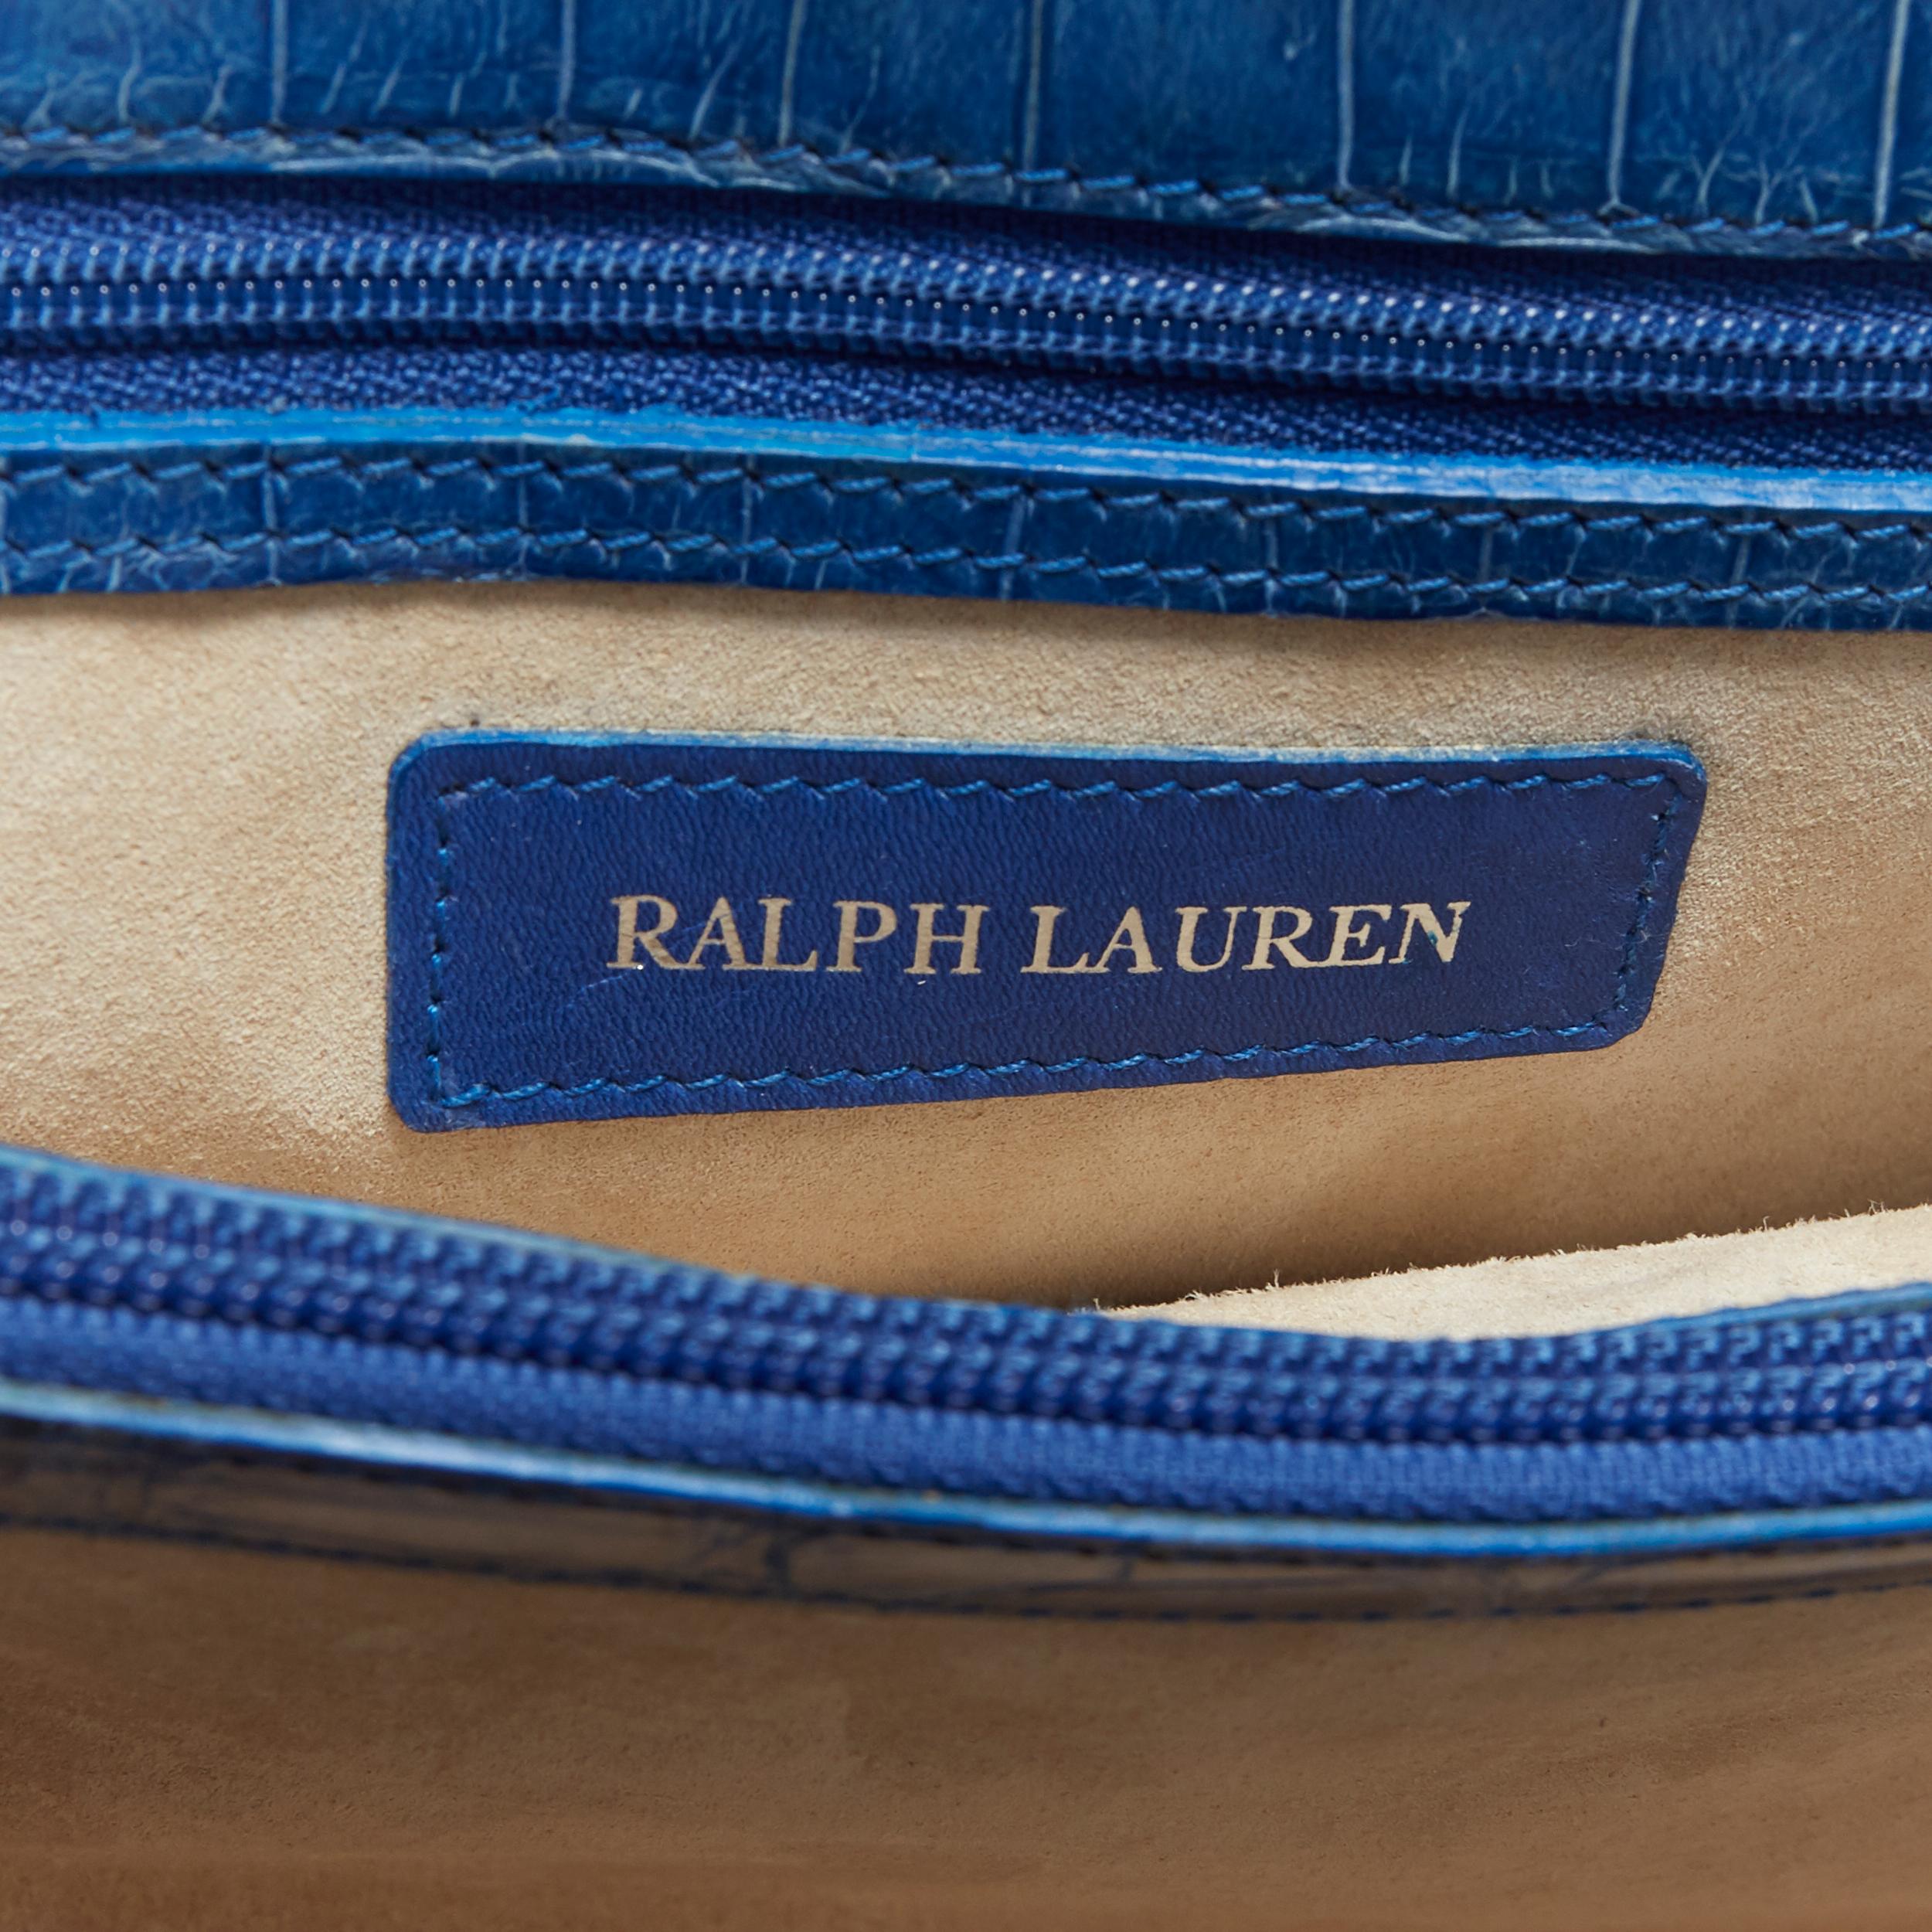 RALPH LAUREN blue crocodile leather top handle structured evening bag 4